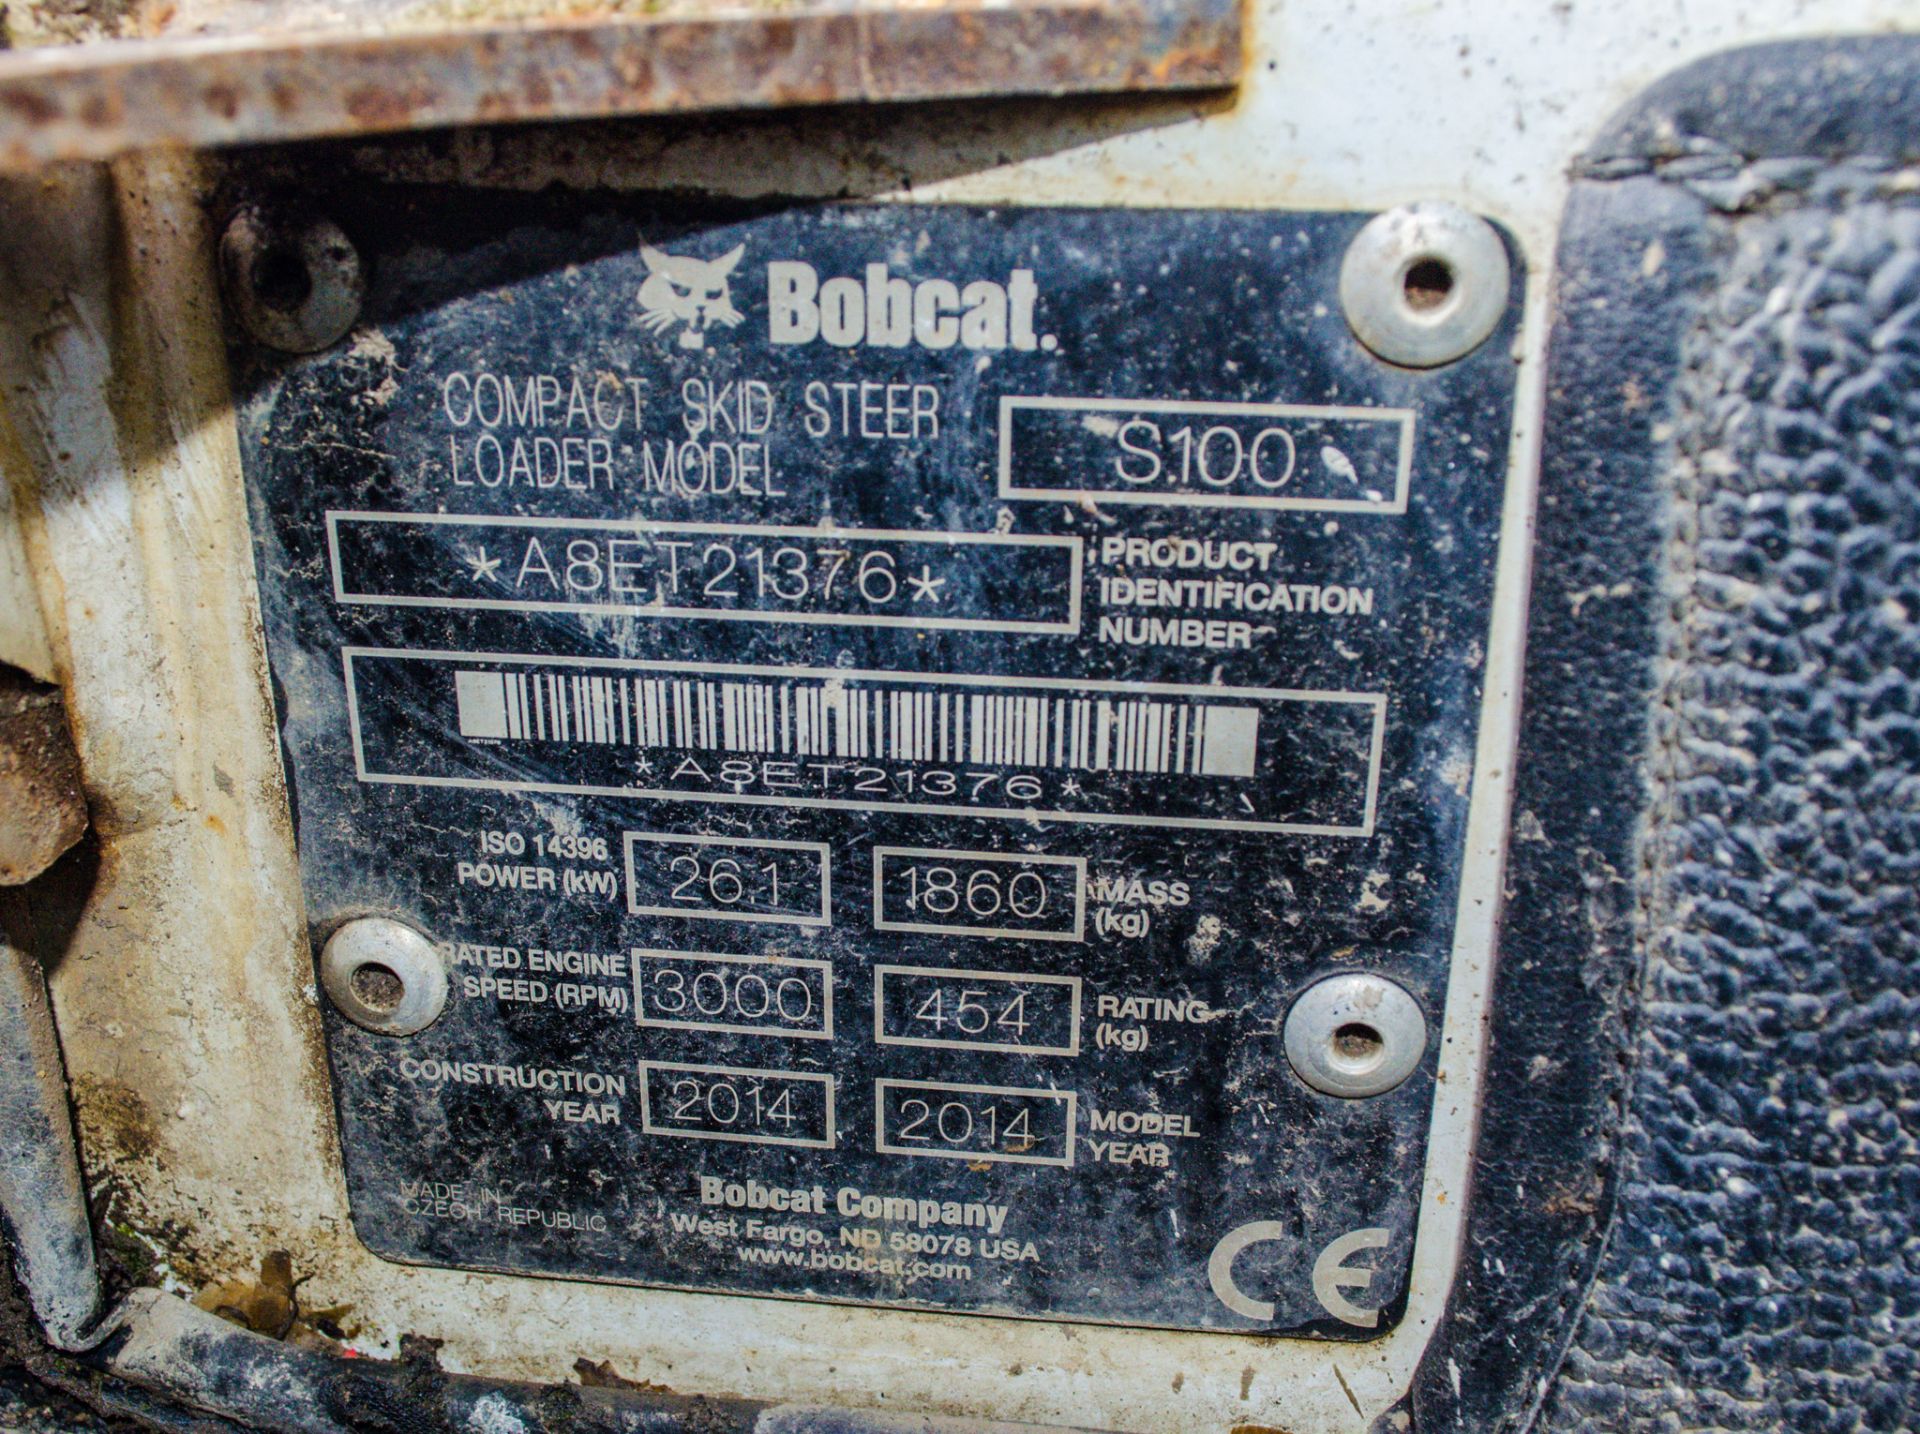 Bobcat S100 1 tonne skid steer loader Year: 2014 S/N: 21376 Recorded Hours: 1280 SSL005 - Image 14 of 18